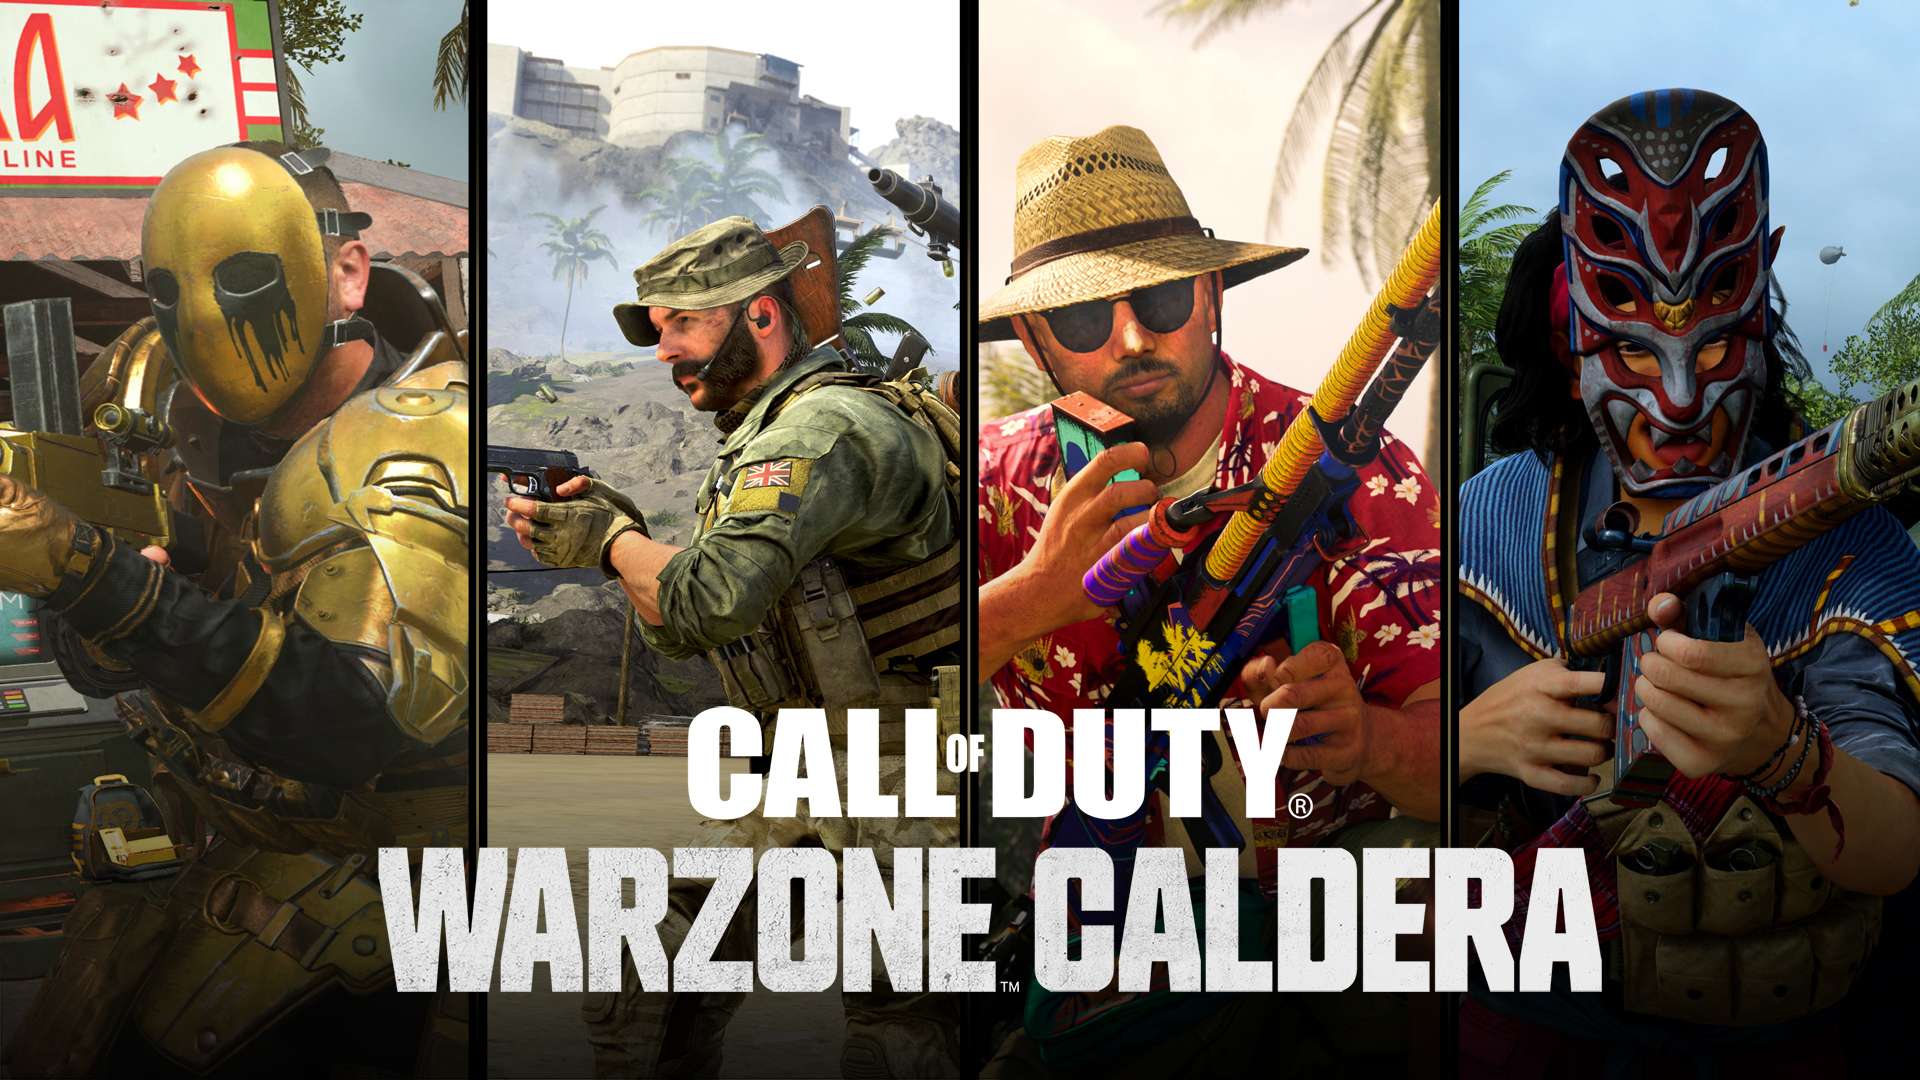 Warzone Caldera key art showing Operators